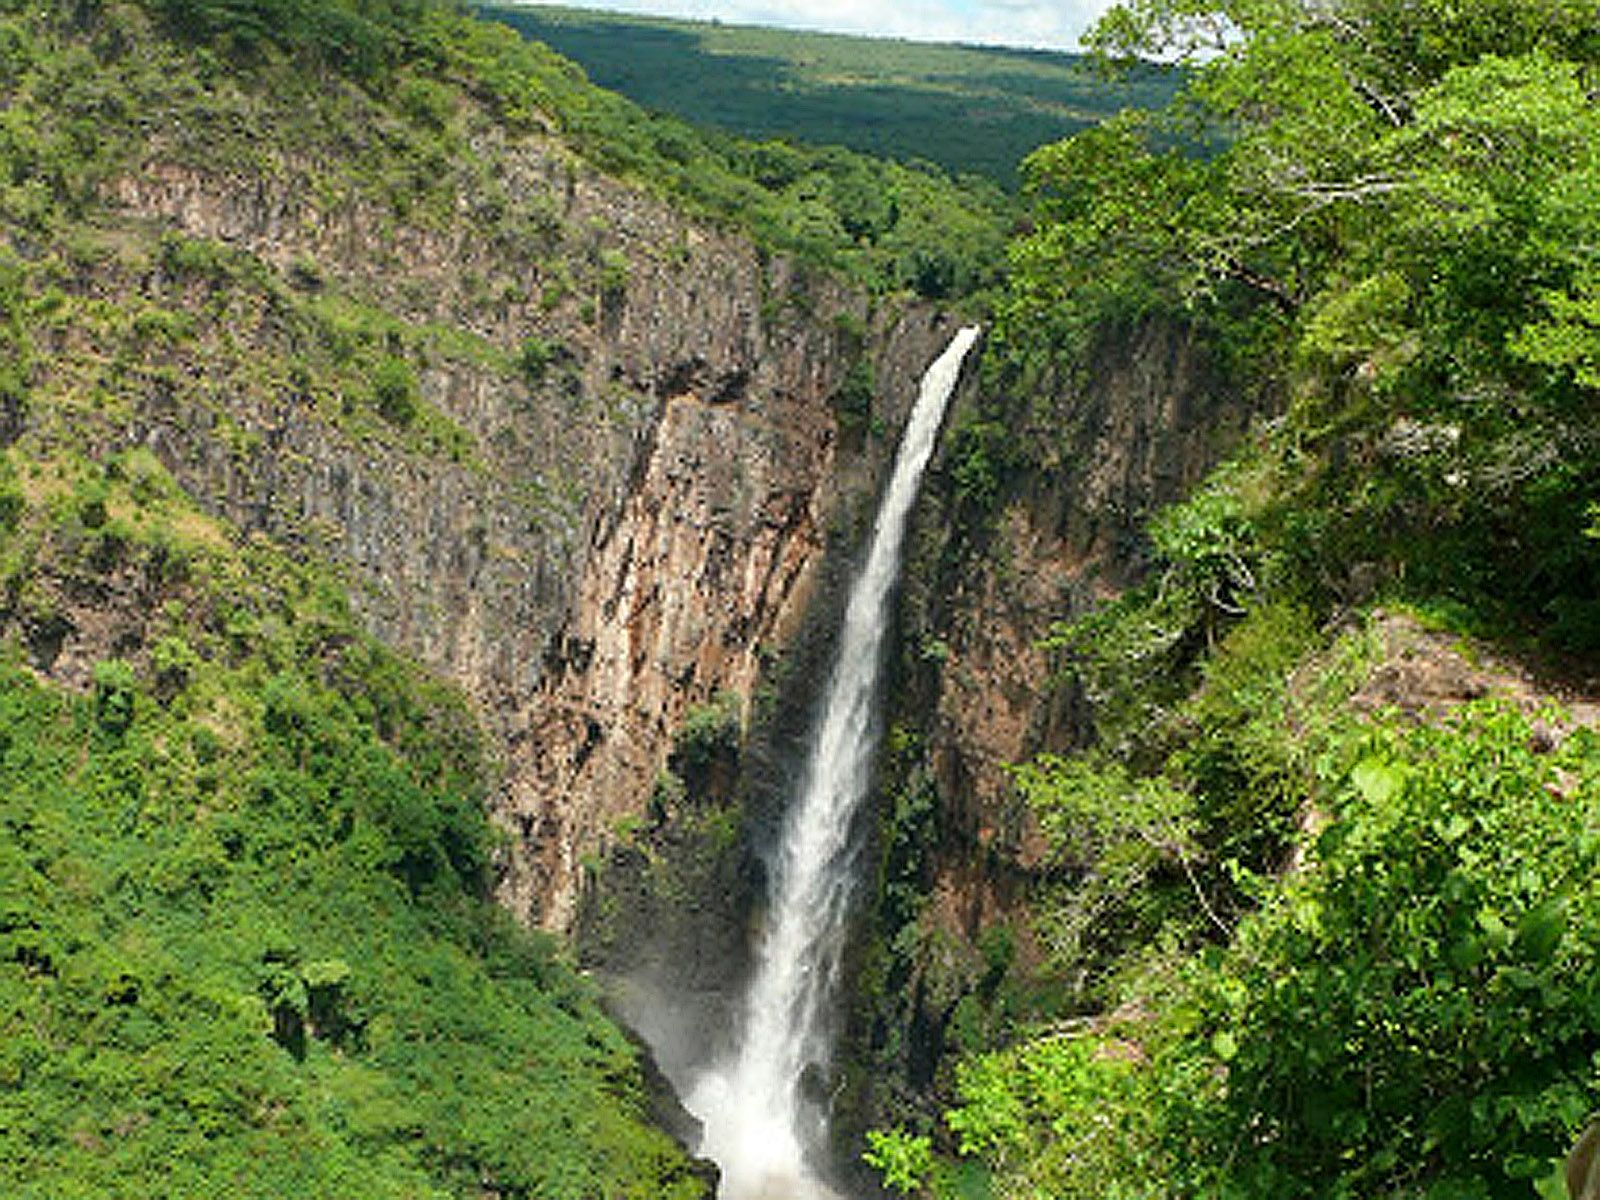 Download this Kalambo Falls picture